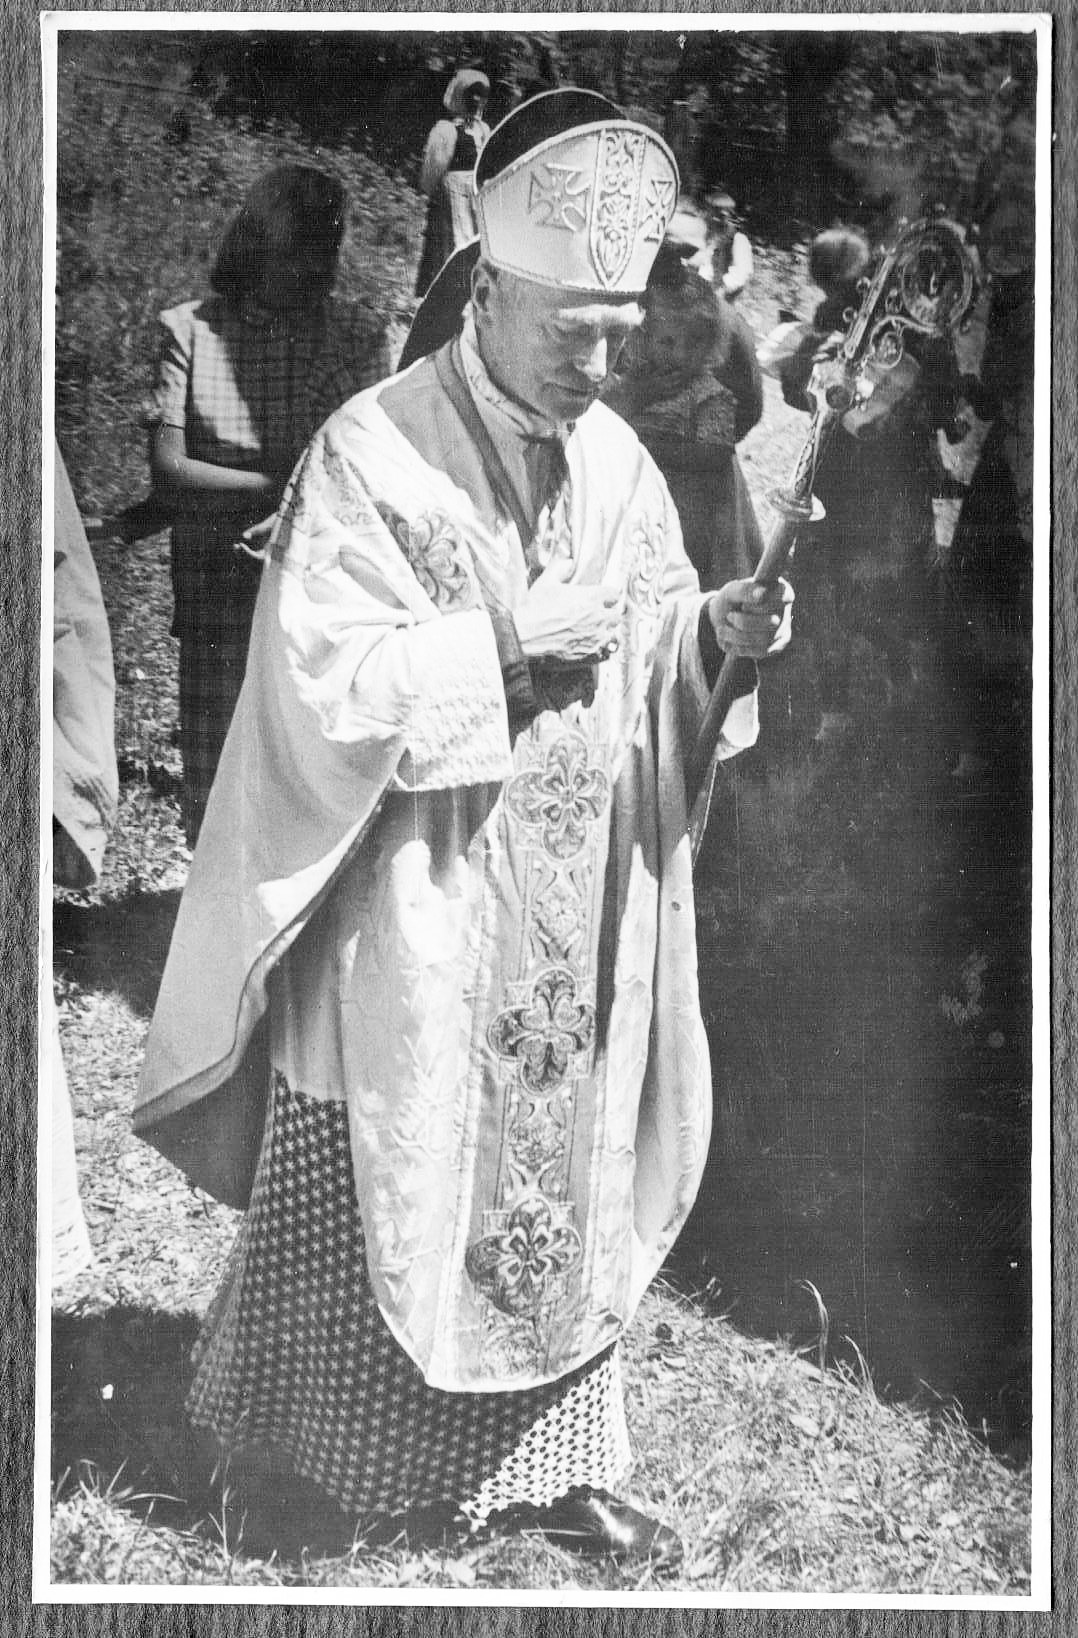 The Roman Catholic Bishop Márton Áron 